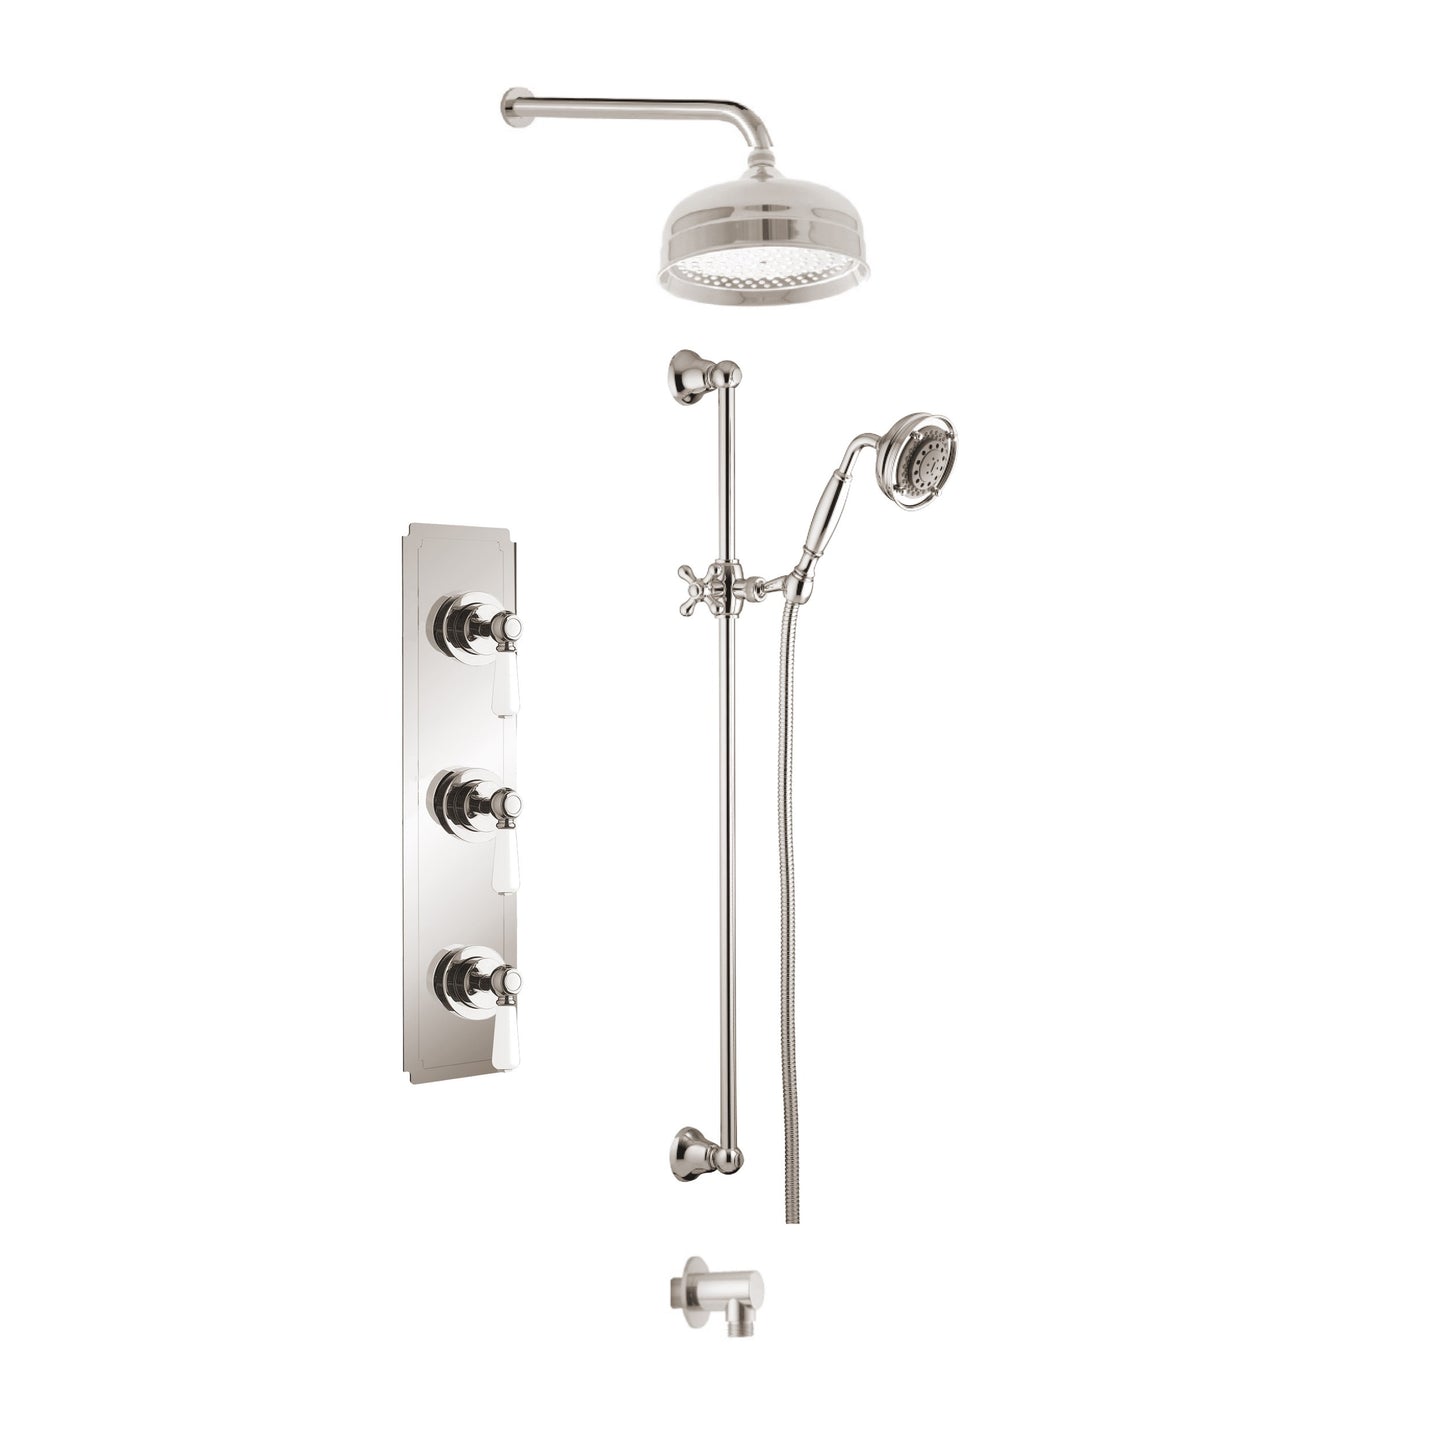 Aquadesign Products Kit de douche (Regent 3712RL) – Nickel poli avec poignée blanche